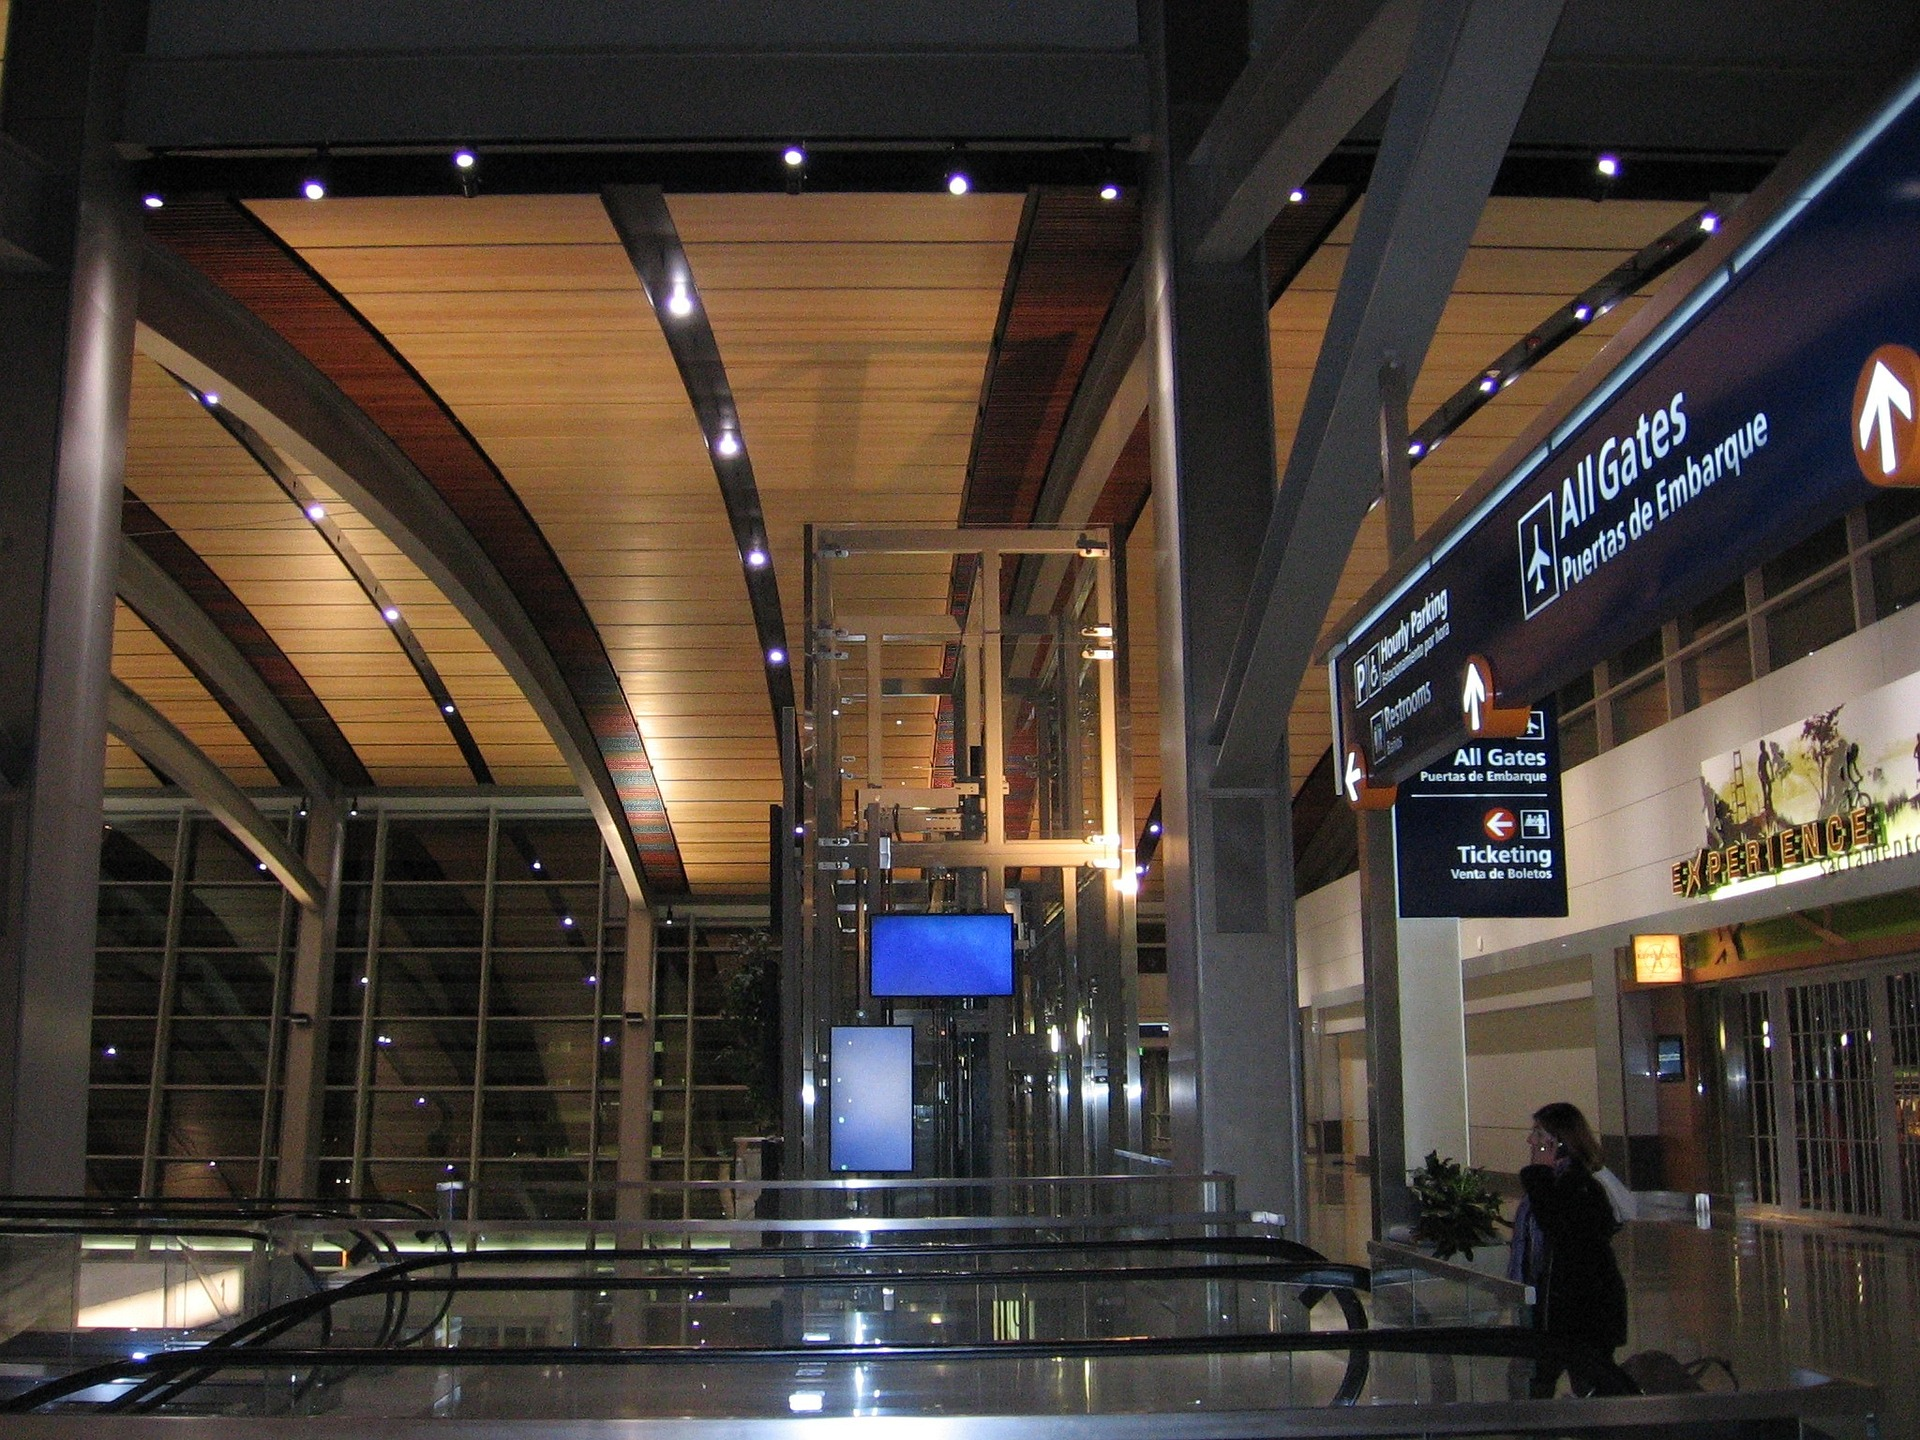 The Sacramento international airport